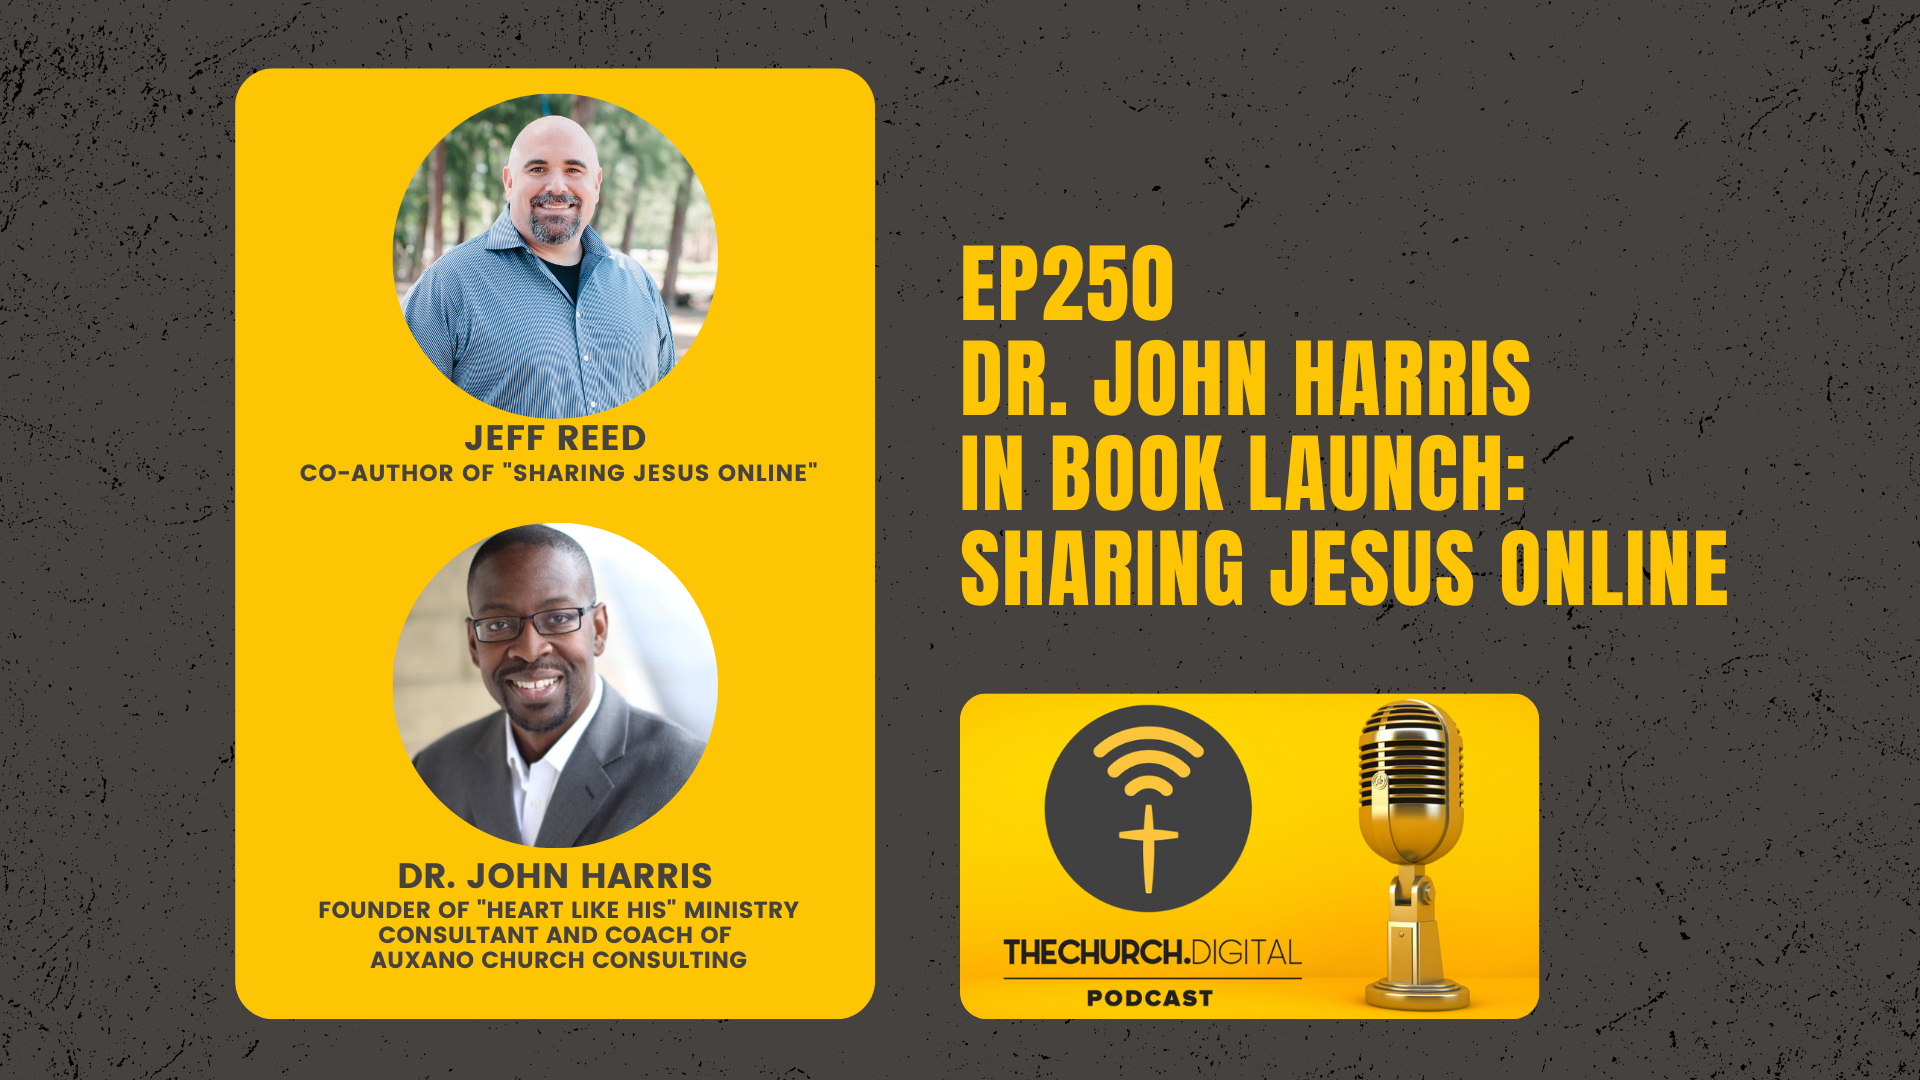 EP250 - Dr. John Harris in Book Launch: Sharing Jesus Online